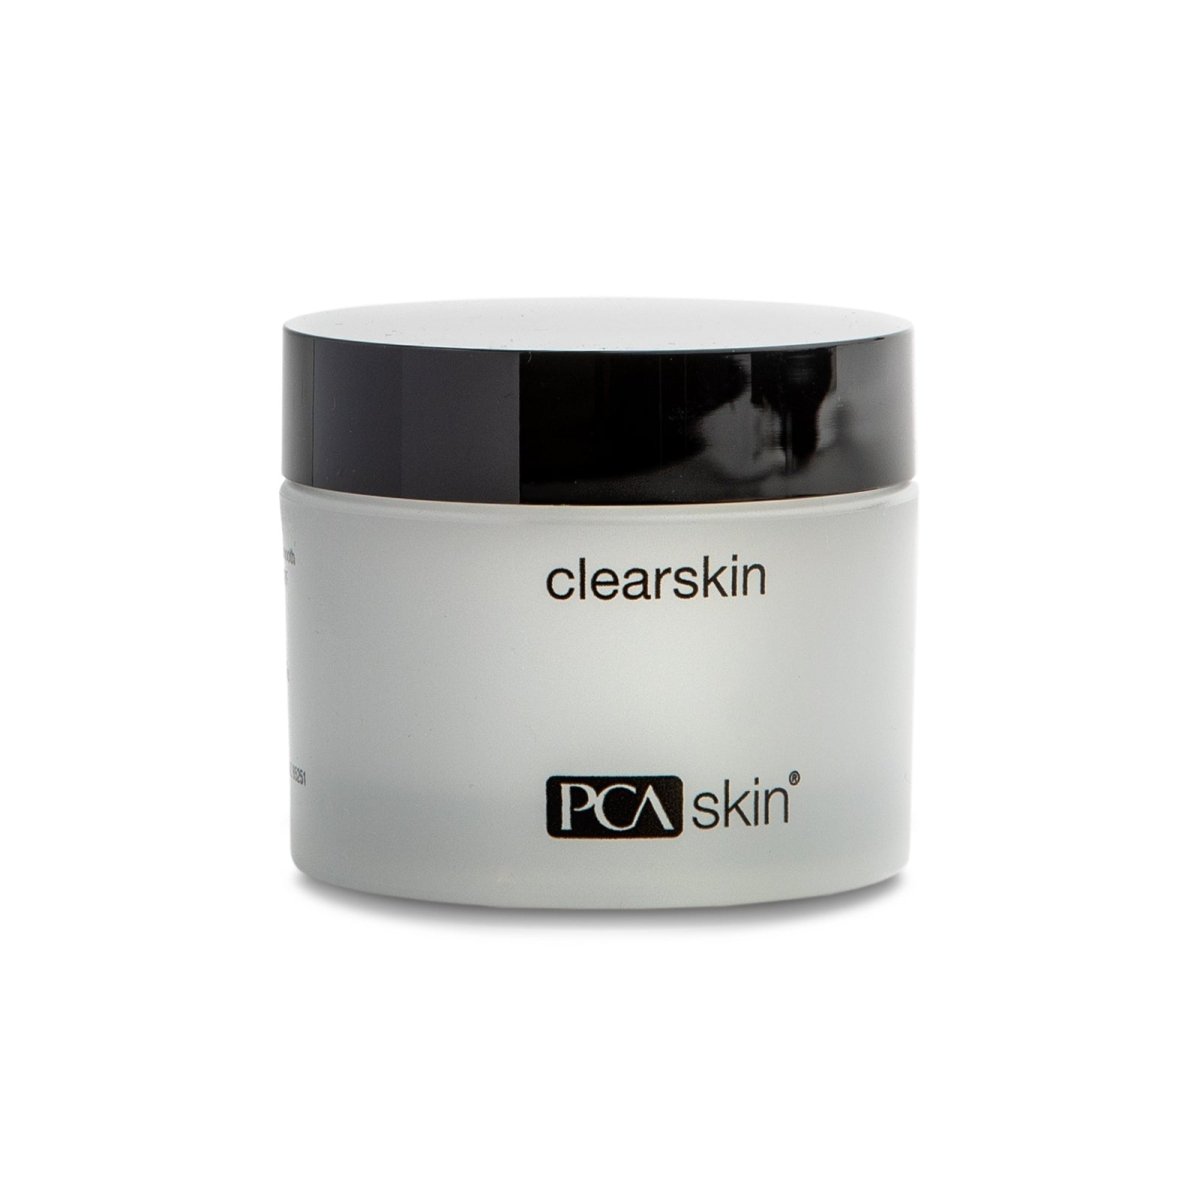 PCA Skin Clearskin Moisturizer - SkincareEssentials